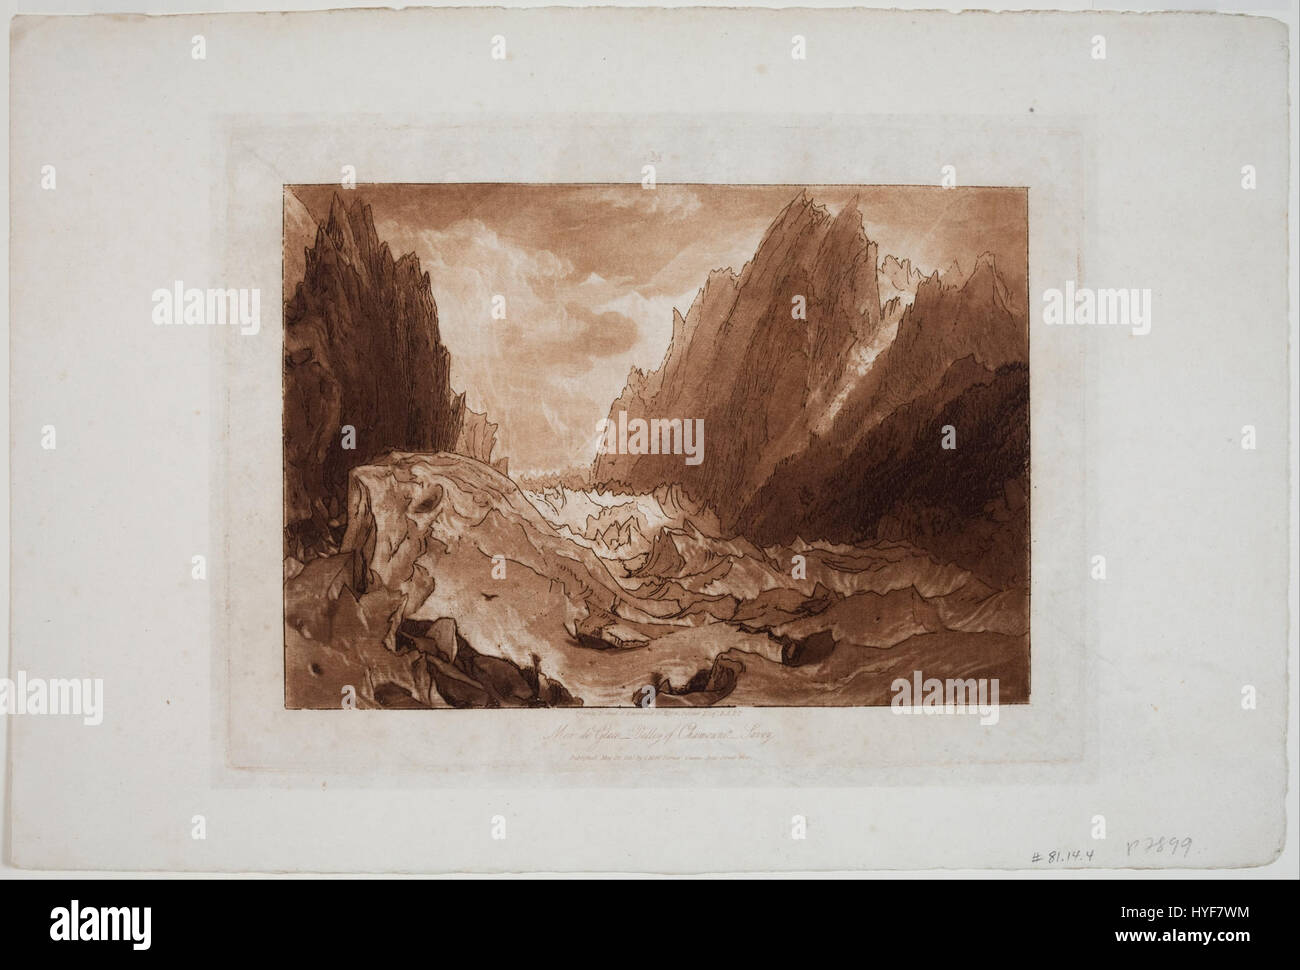 Joseph Mallord William Turner   Mer de Glace   Valley of Chamonix   Savoy, from the Liber Studiorum   Google Art Project Stock Photo